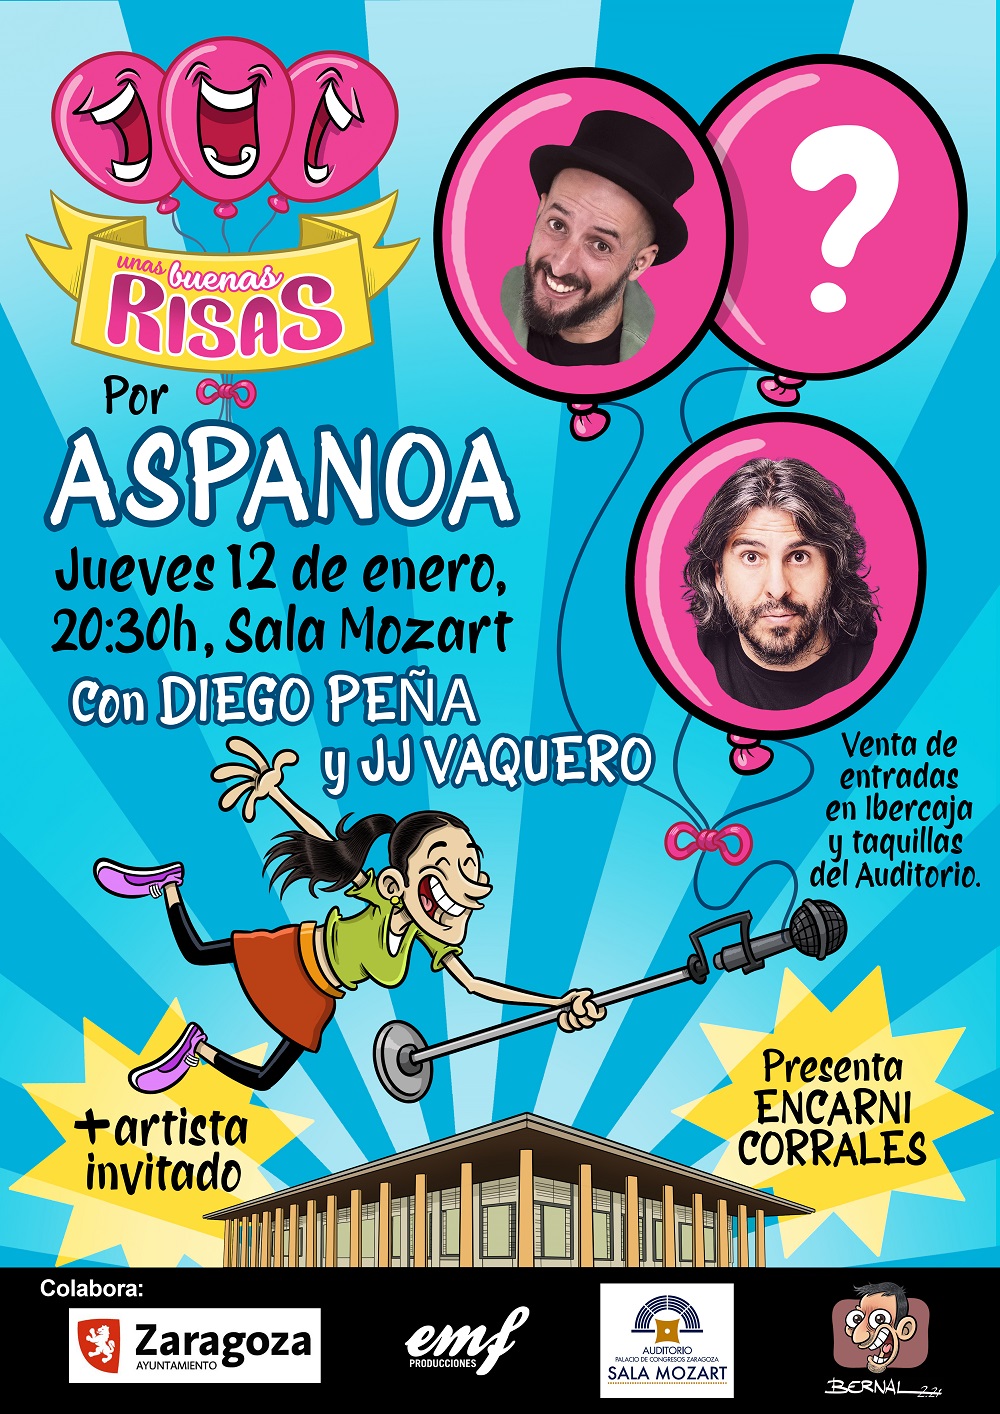 Diego Peña Aspanoa